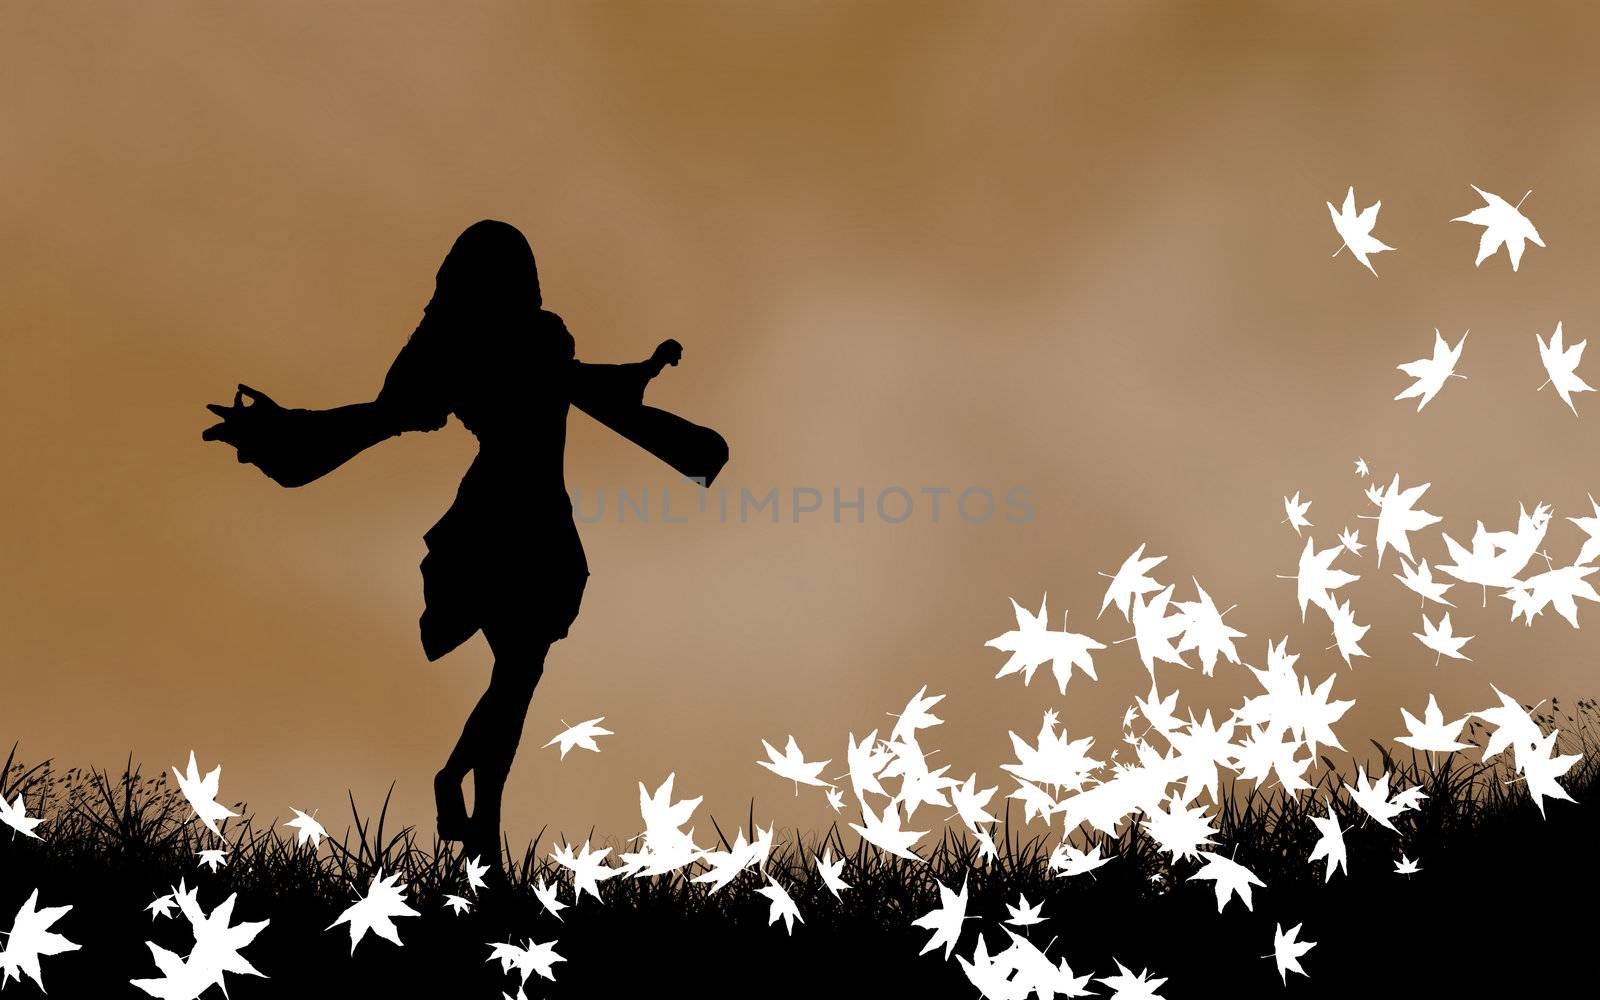 Autumn Concept Illustration by newt96